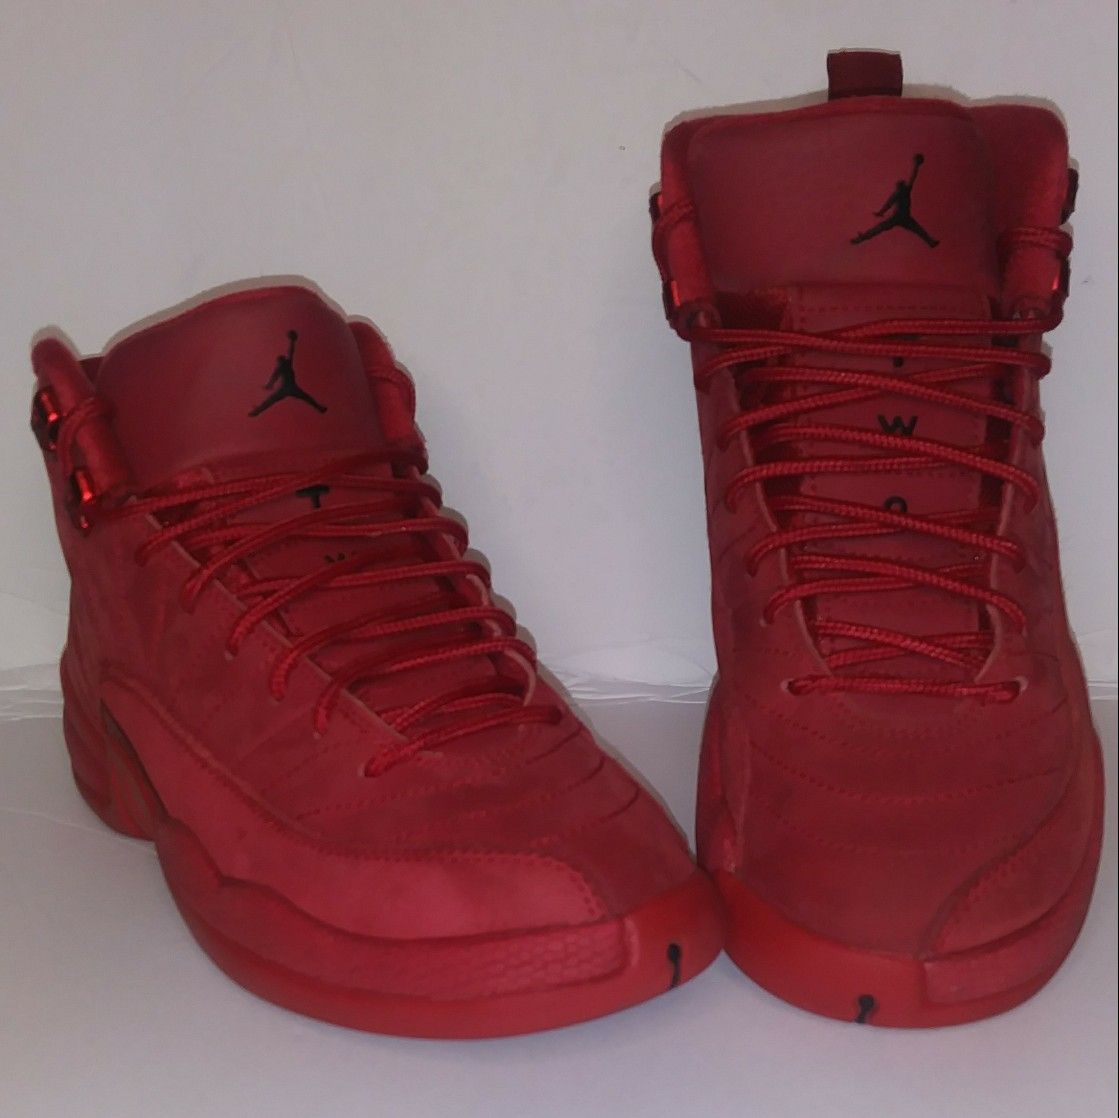 Jordan 12 Red Suede Size 6